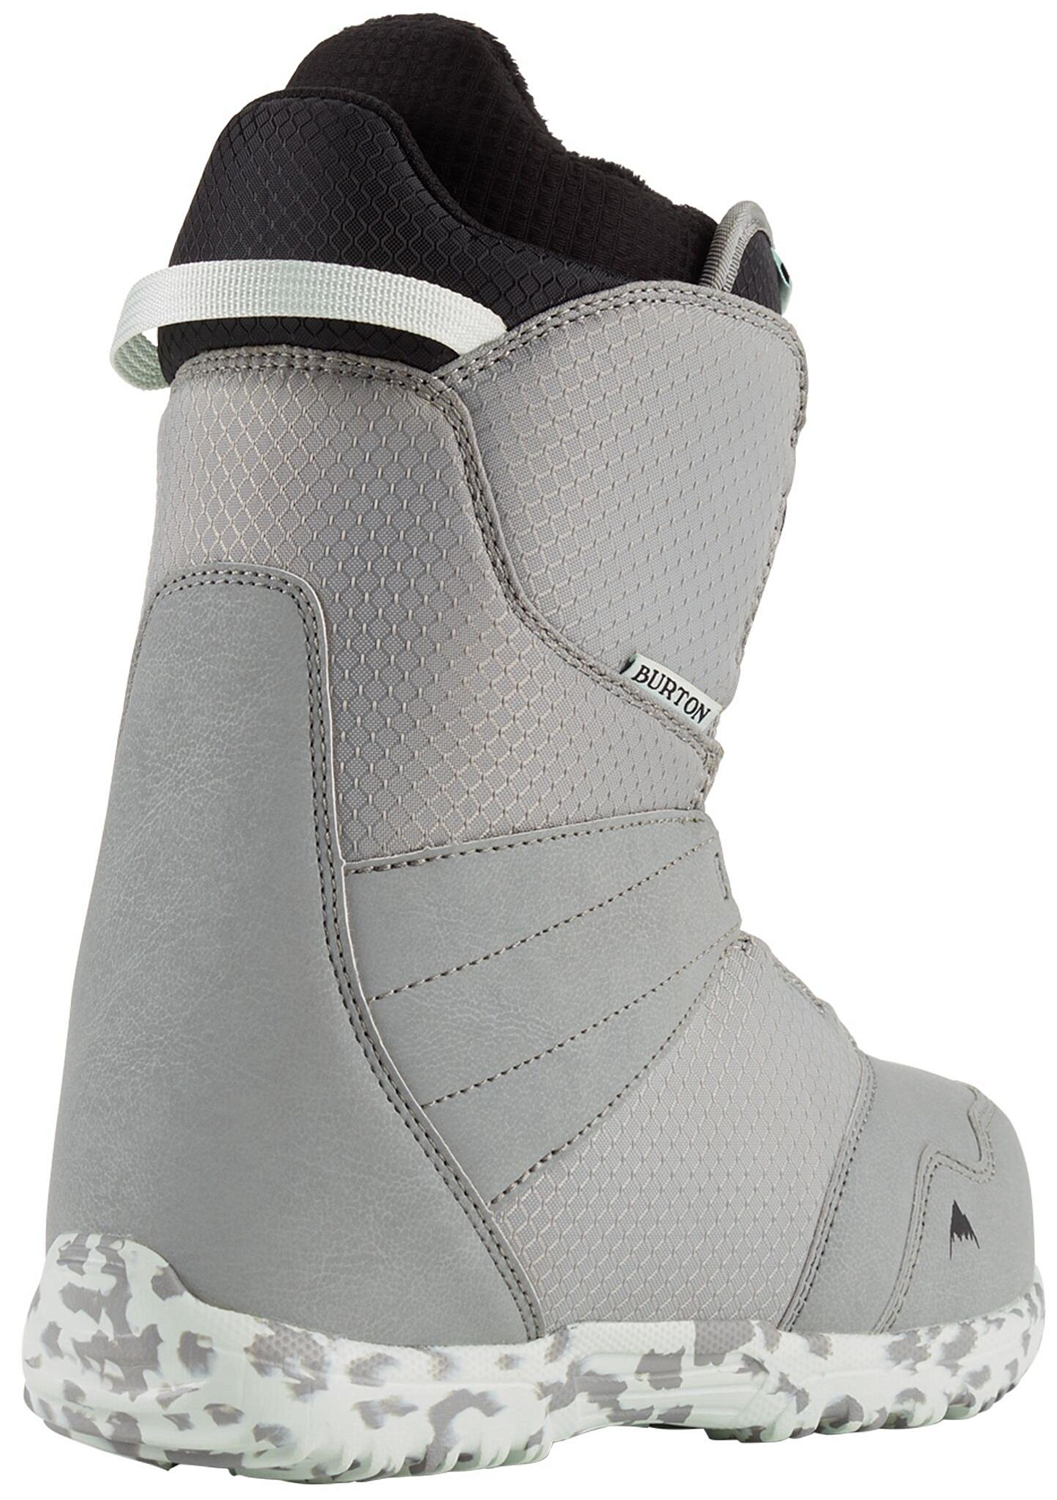 Ботинки для сноуборда BURTON 2020-21 Zipline Boa Gray/Neo-mint